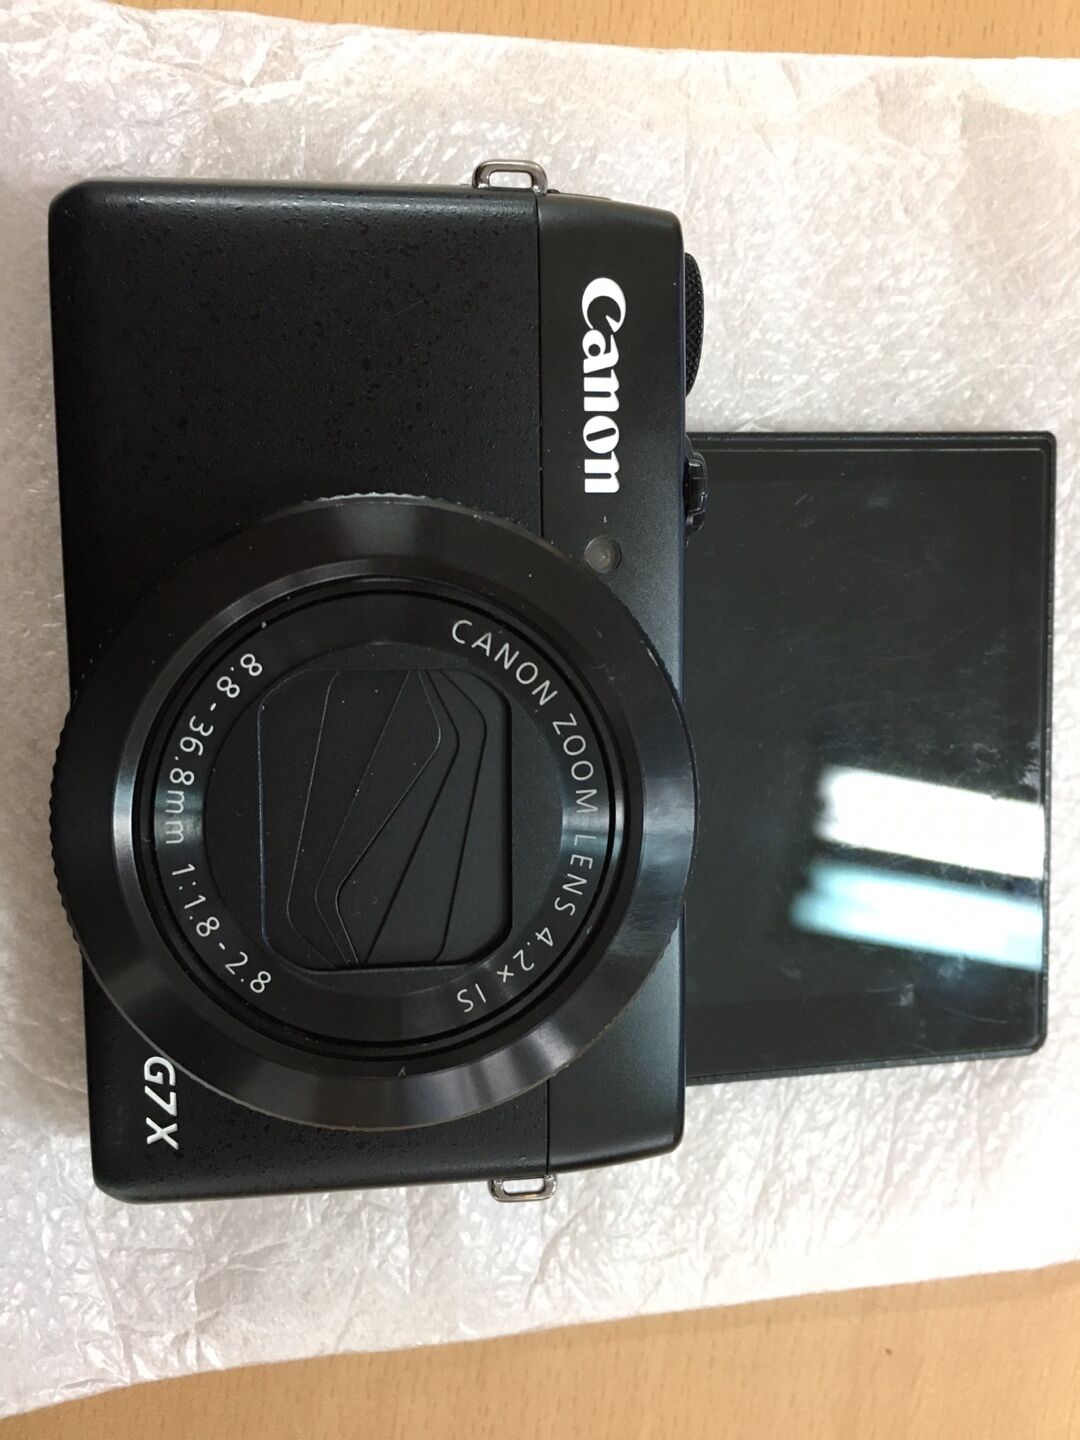 Canon PowerShot G7 X Optical Zoom 4.2x Compact G7X Digital camera used MARK 1